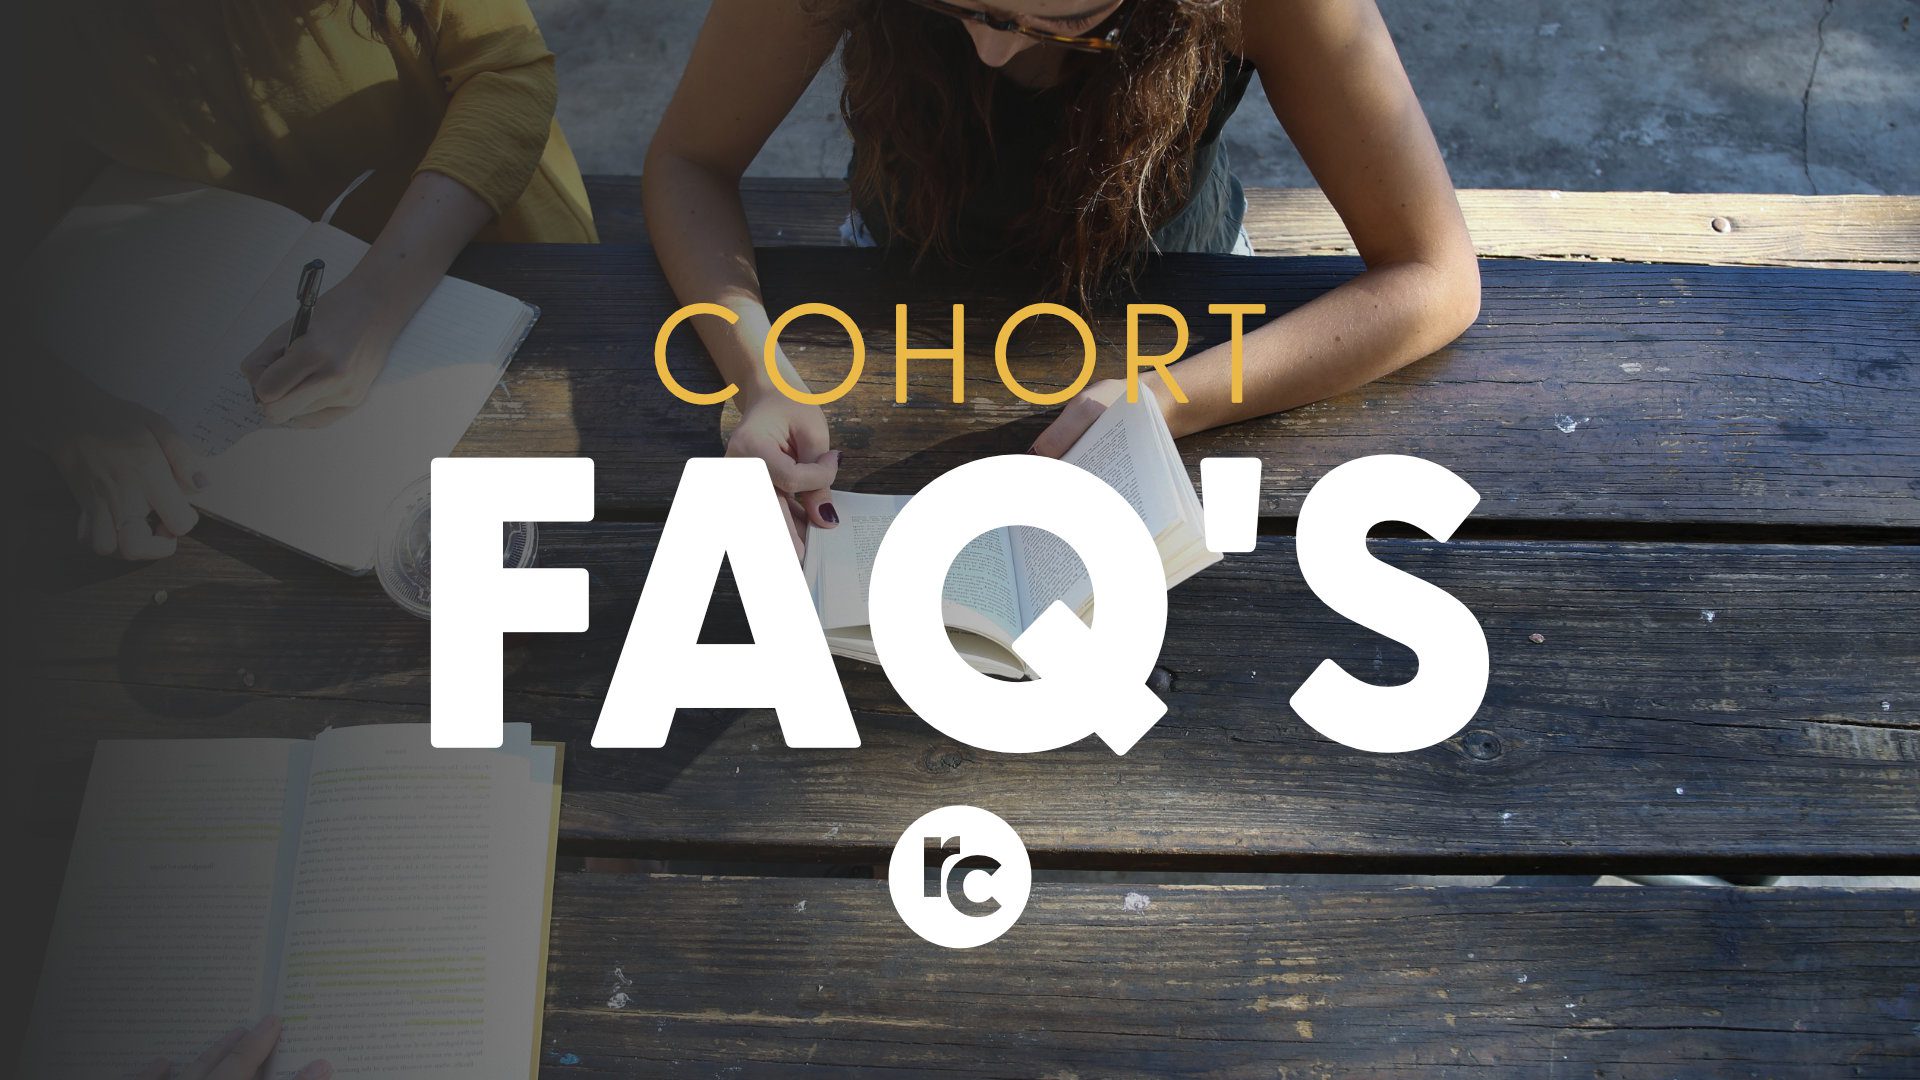 Cohort FAQ’s